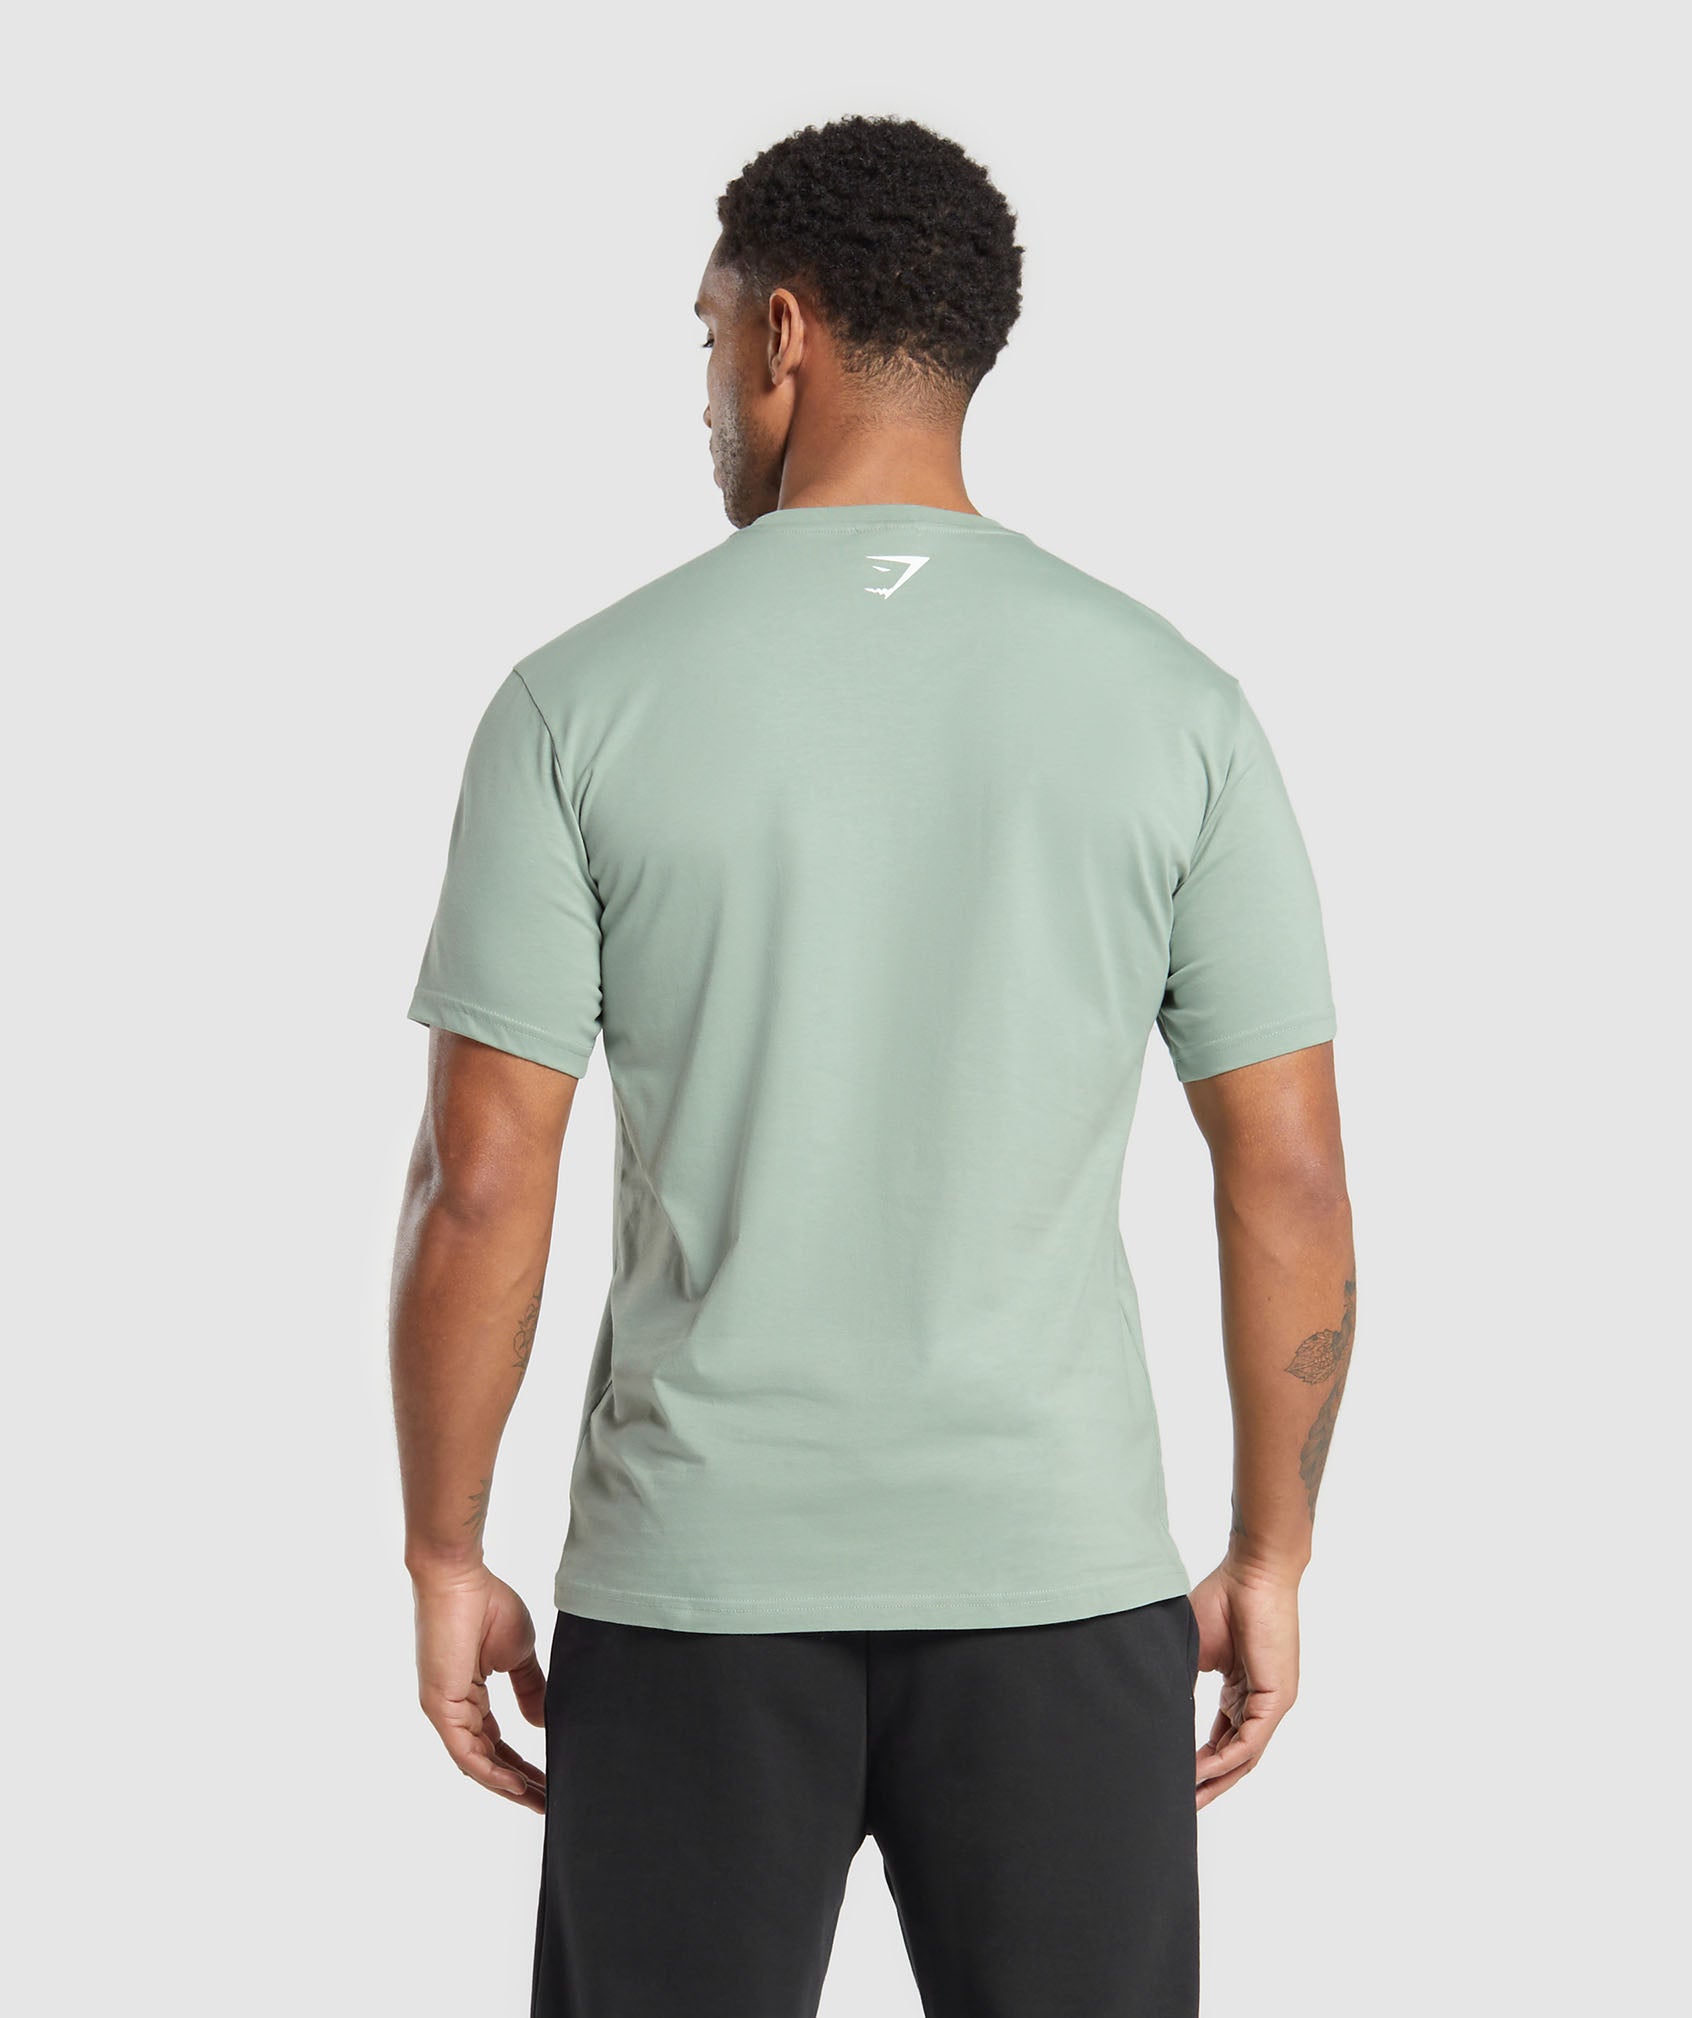 Lifting Club T-Shirt in Dollar Green - view 2